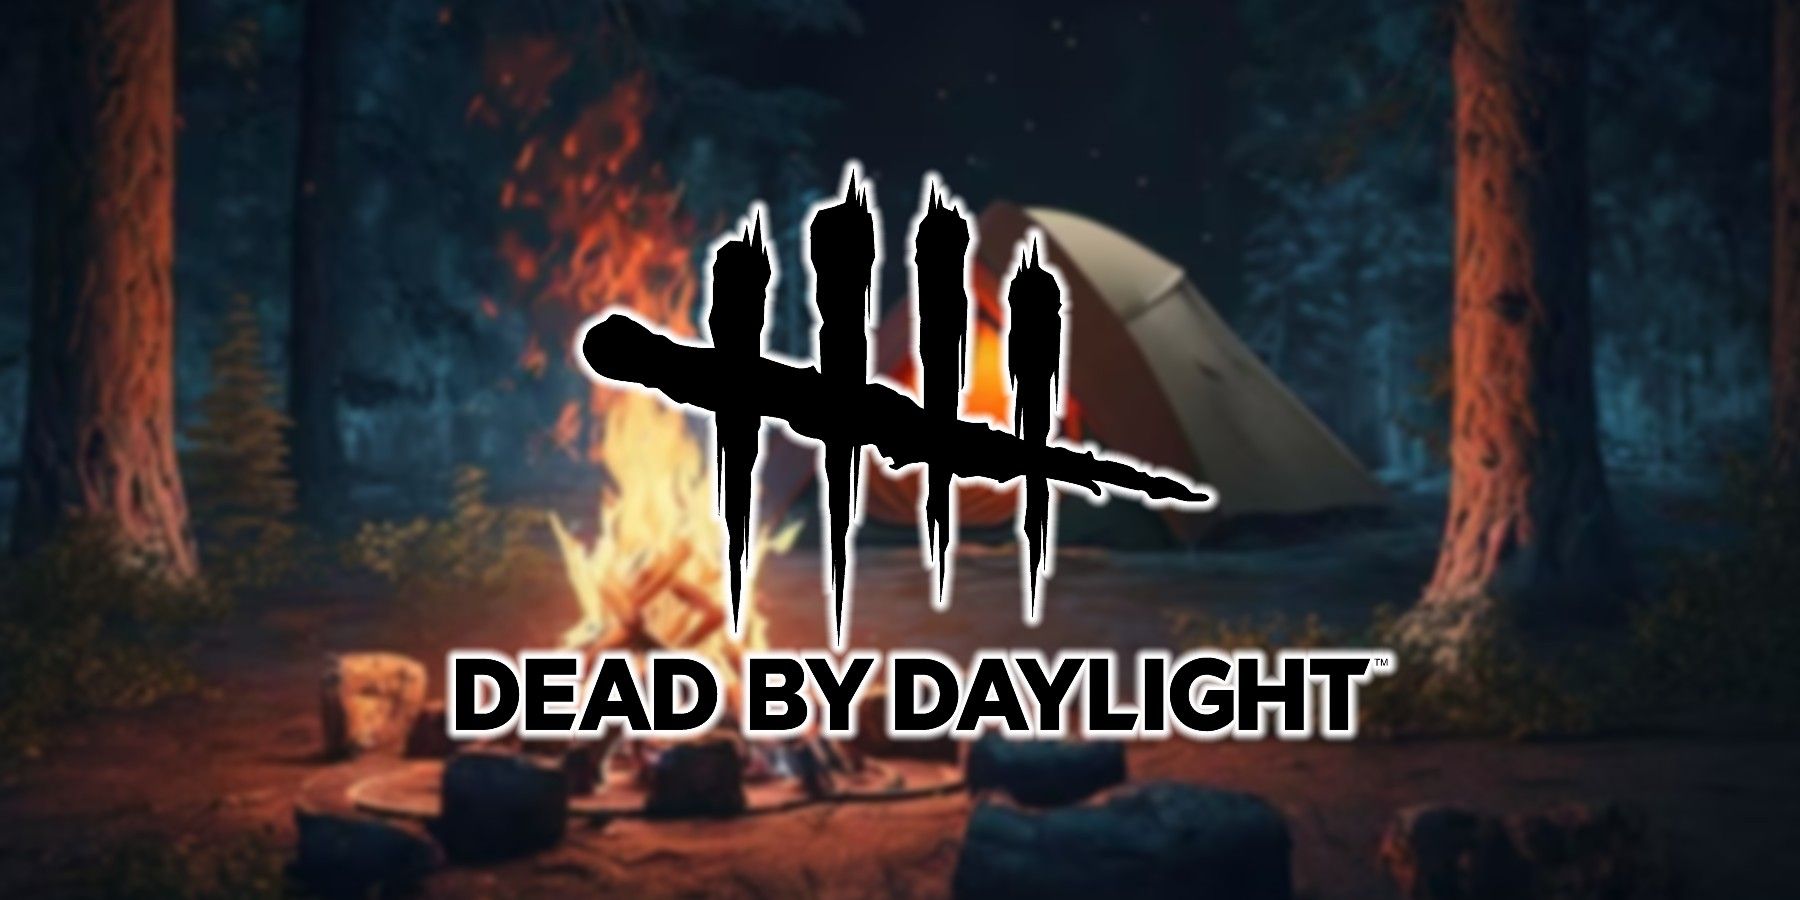 deady-by-daylight-logo-camping-background